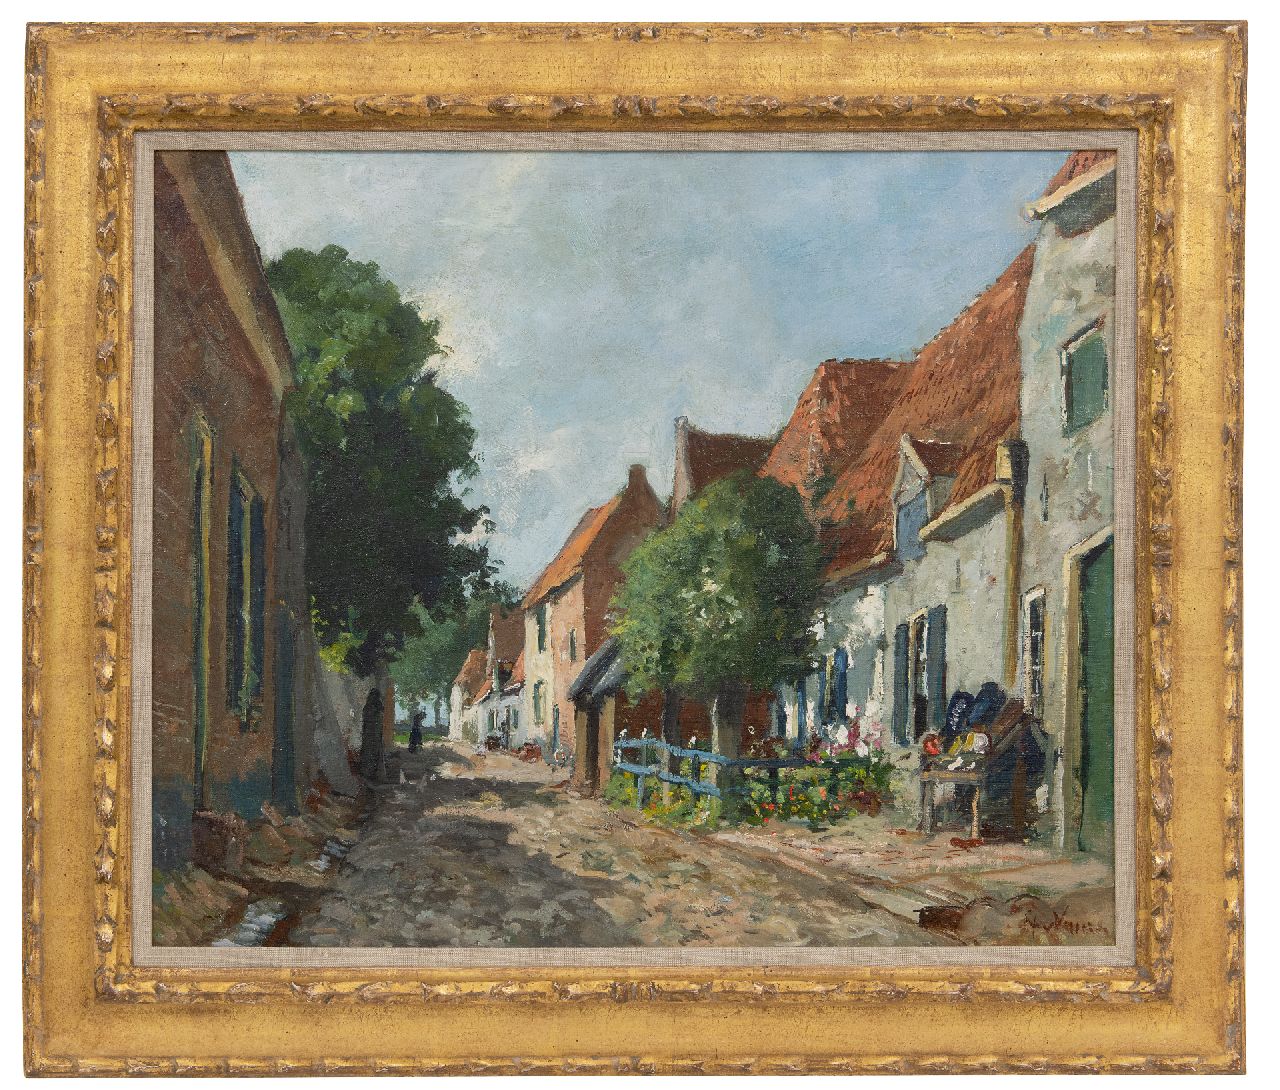 Vuuren J. van | Jan van Vuuren | Paintings offered for sale | A sunny day in Elburg, oil on canvas 50.0 x 60.0 cm, signed l.r.